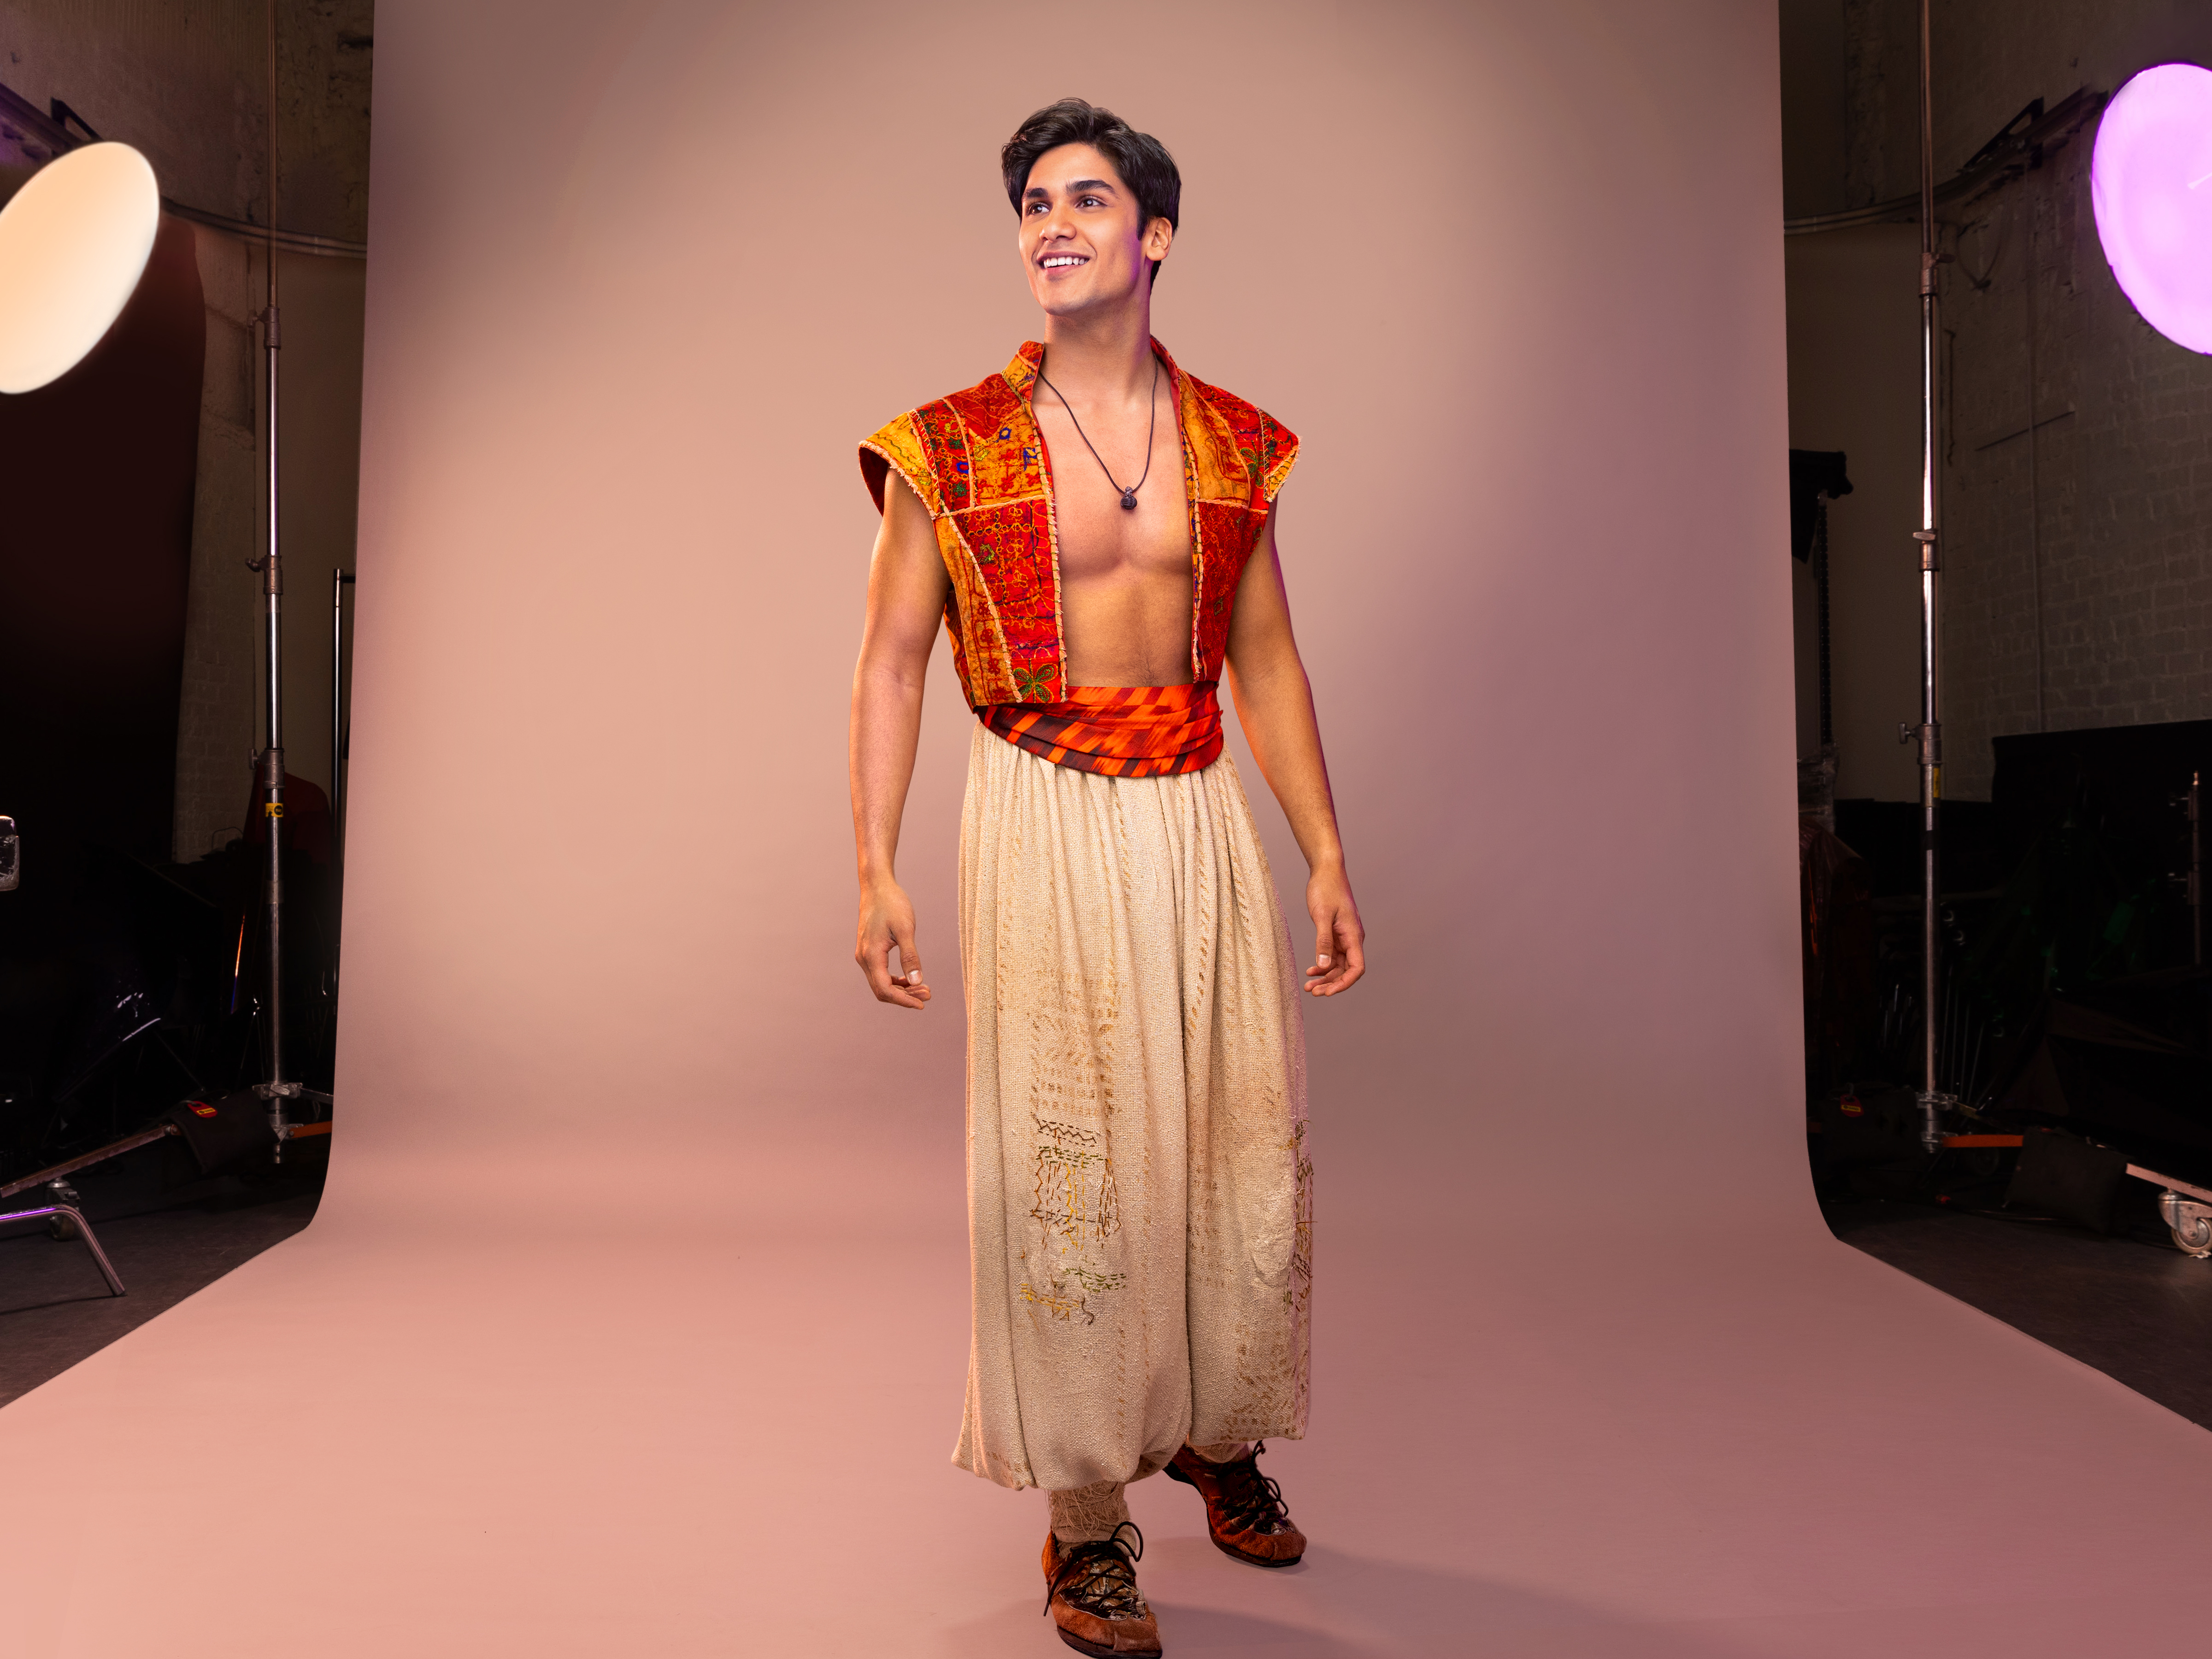 Adi Roy as Aladdin in Disney's Aladdin on Broadway photo by Matthew Murphy